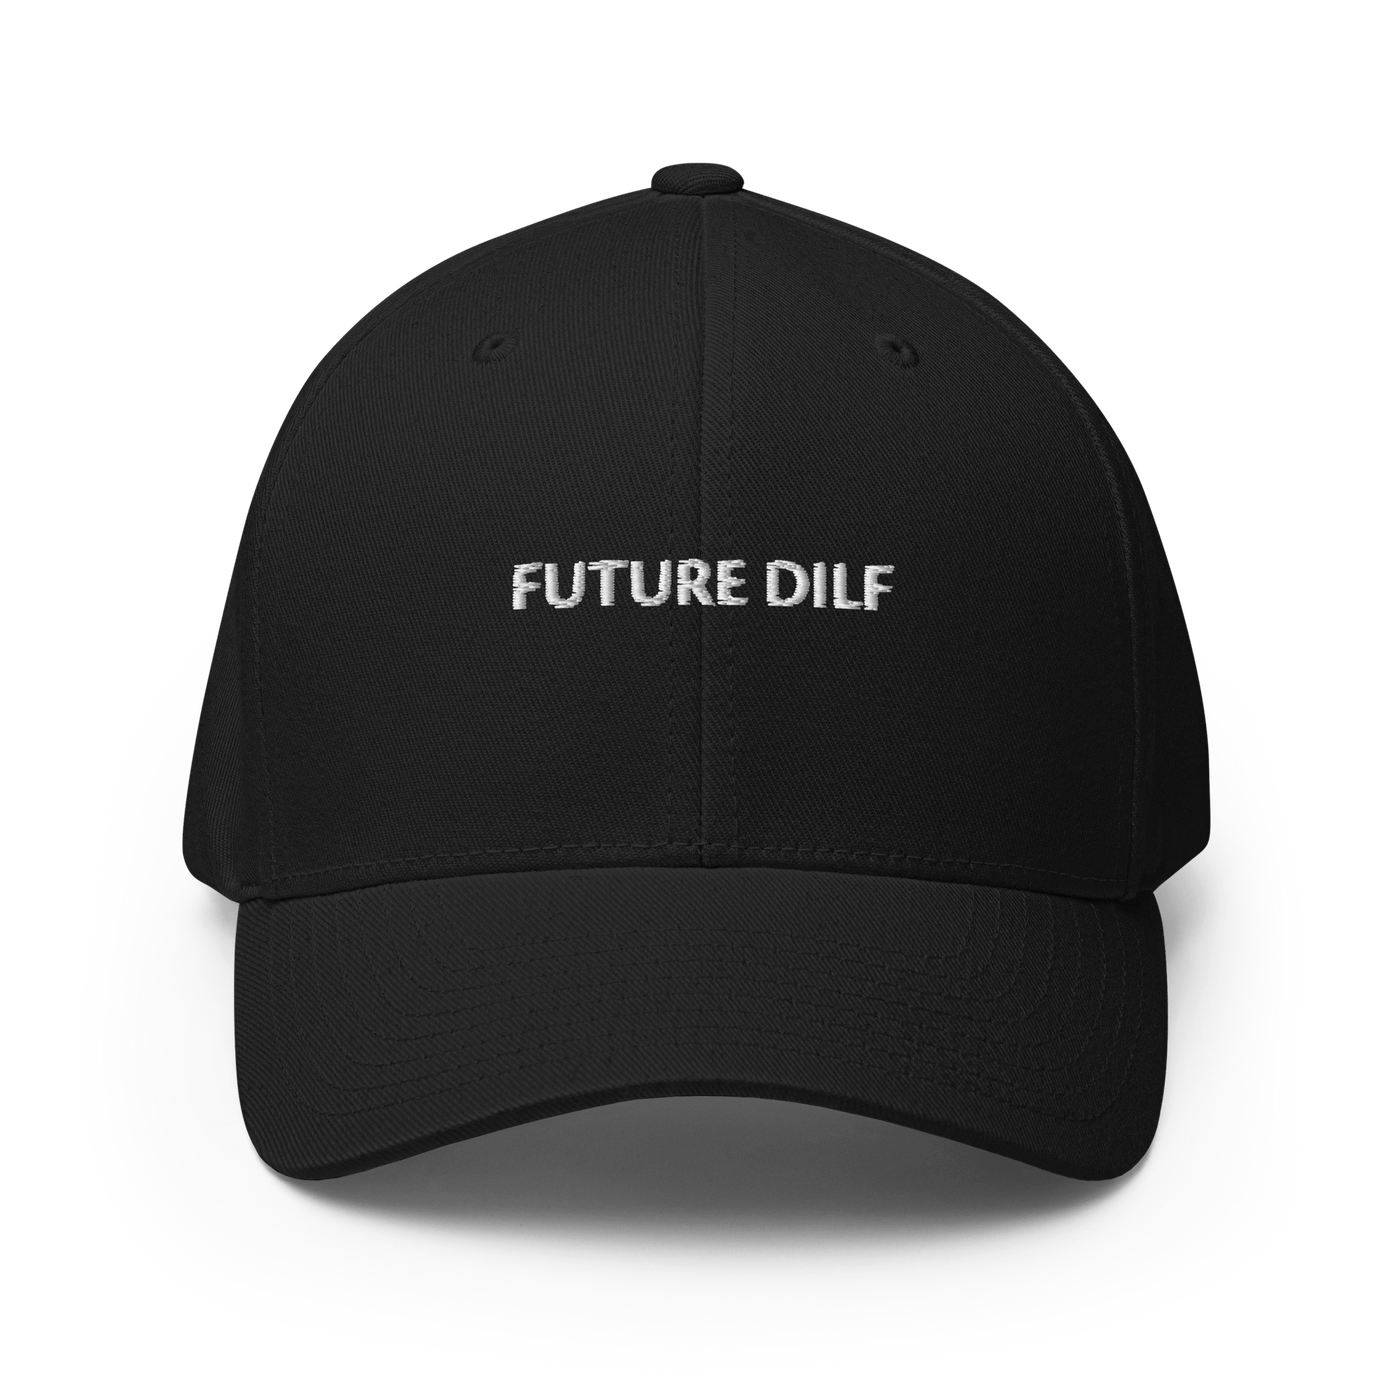 Future Dilf Flexfit Cap - Black - S/M - Just Another Cap Store